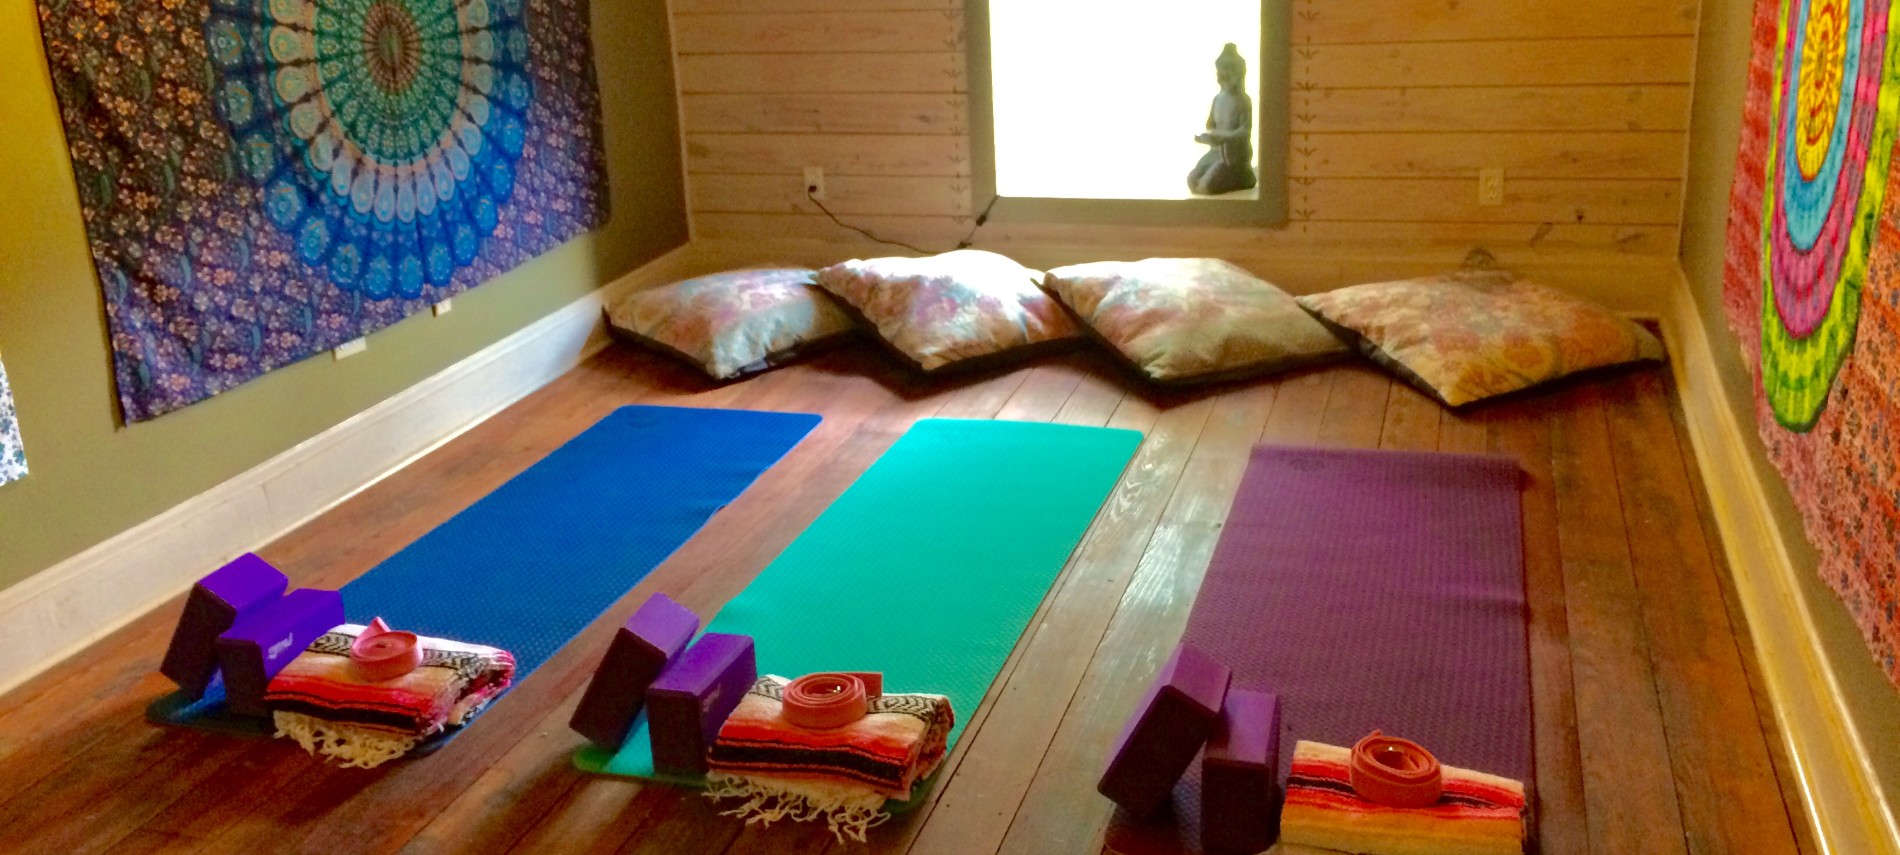 the yoga studio with mats